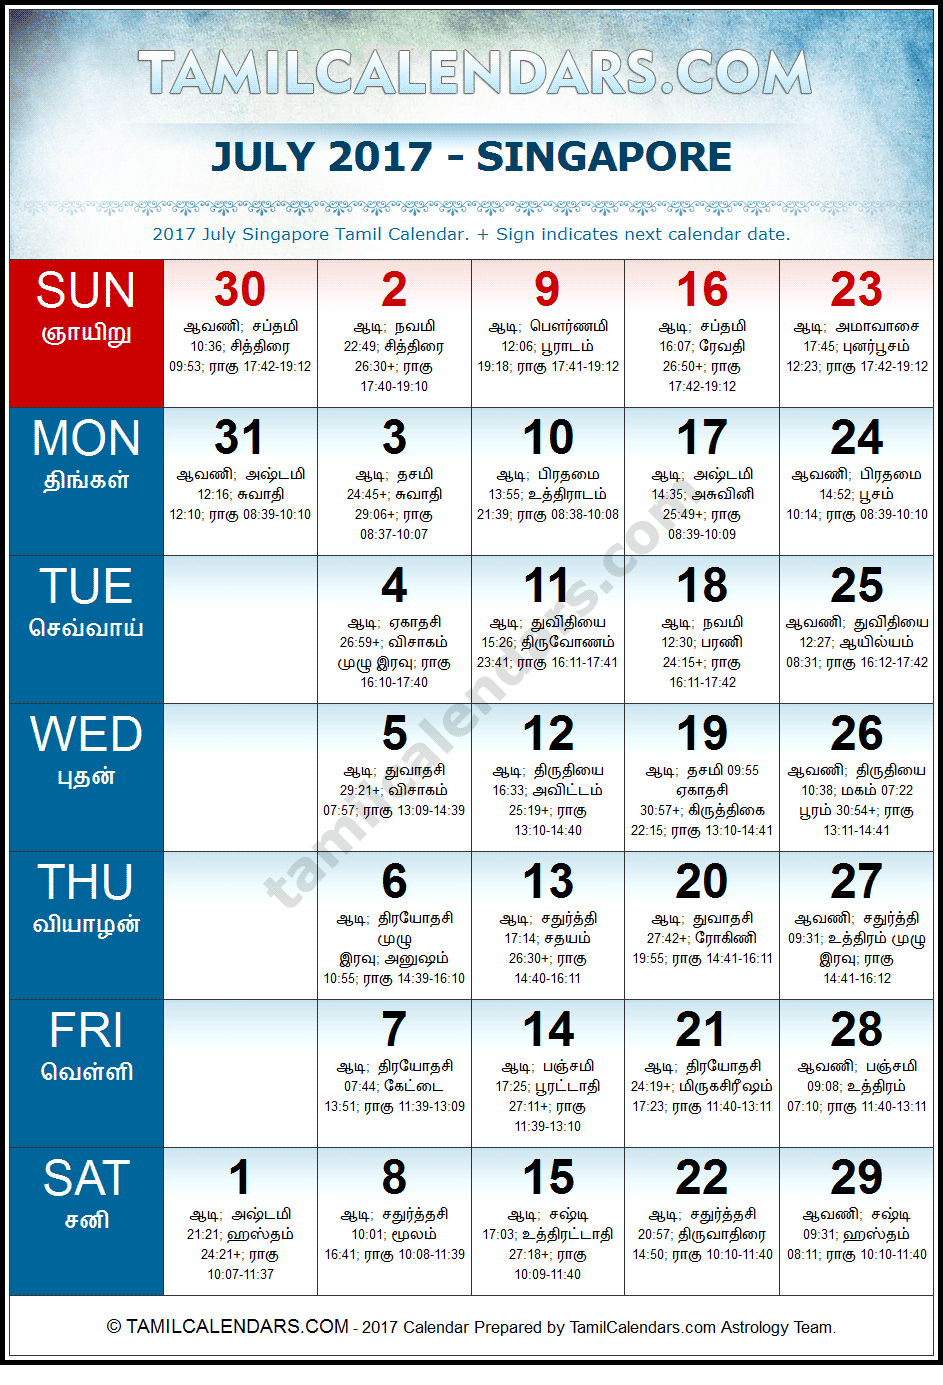 July 2017 Tamil Calendar for Singapore